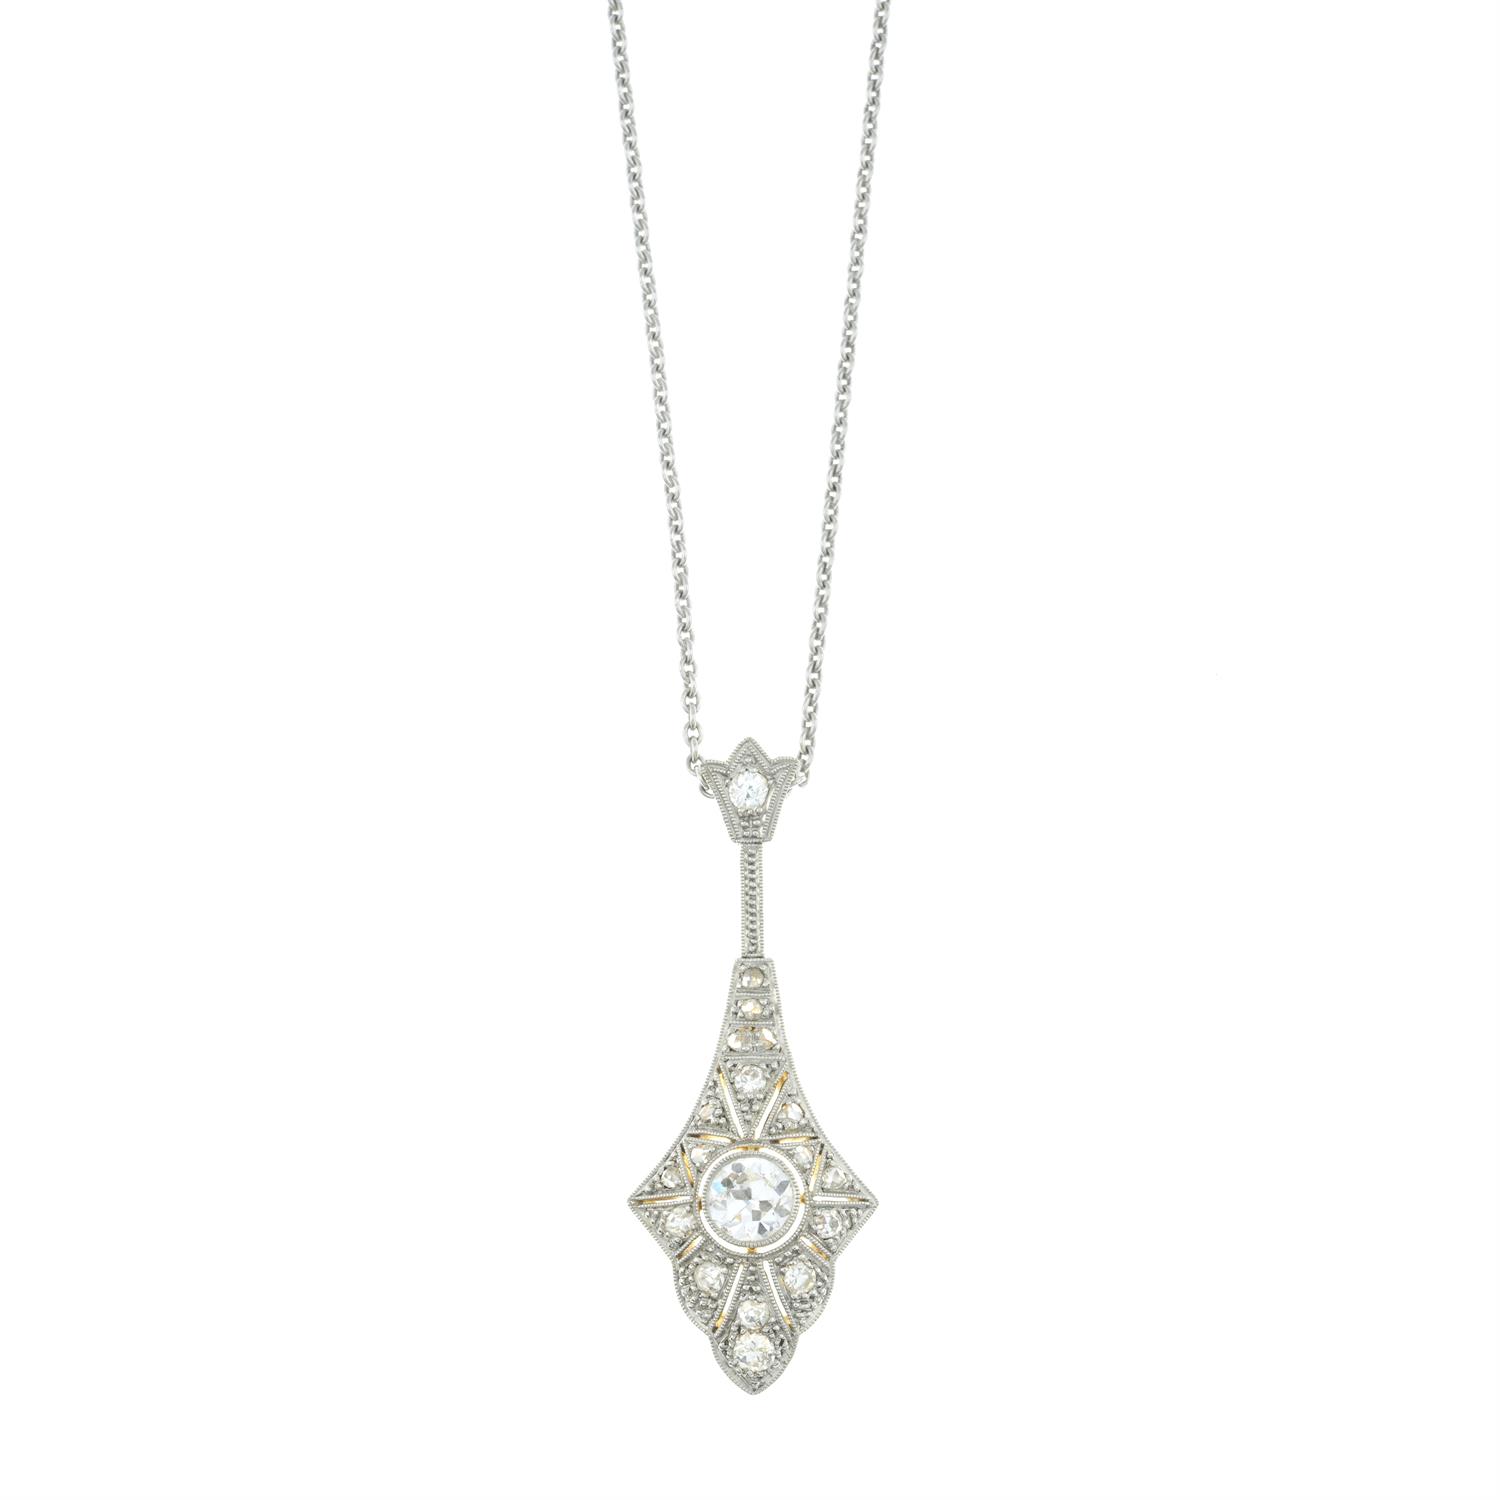 Diamond pendant, on chain - Image 2 of 6